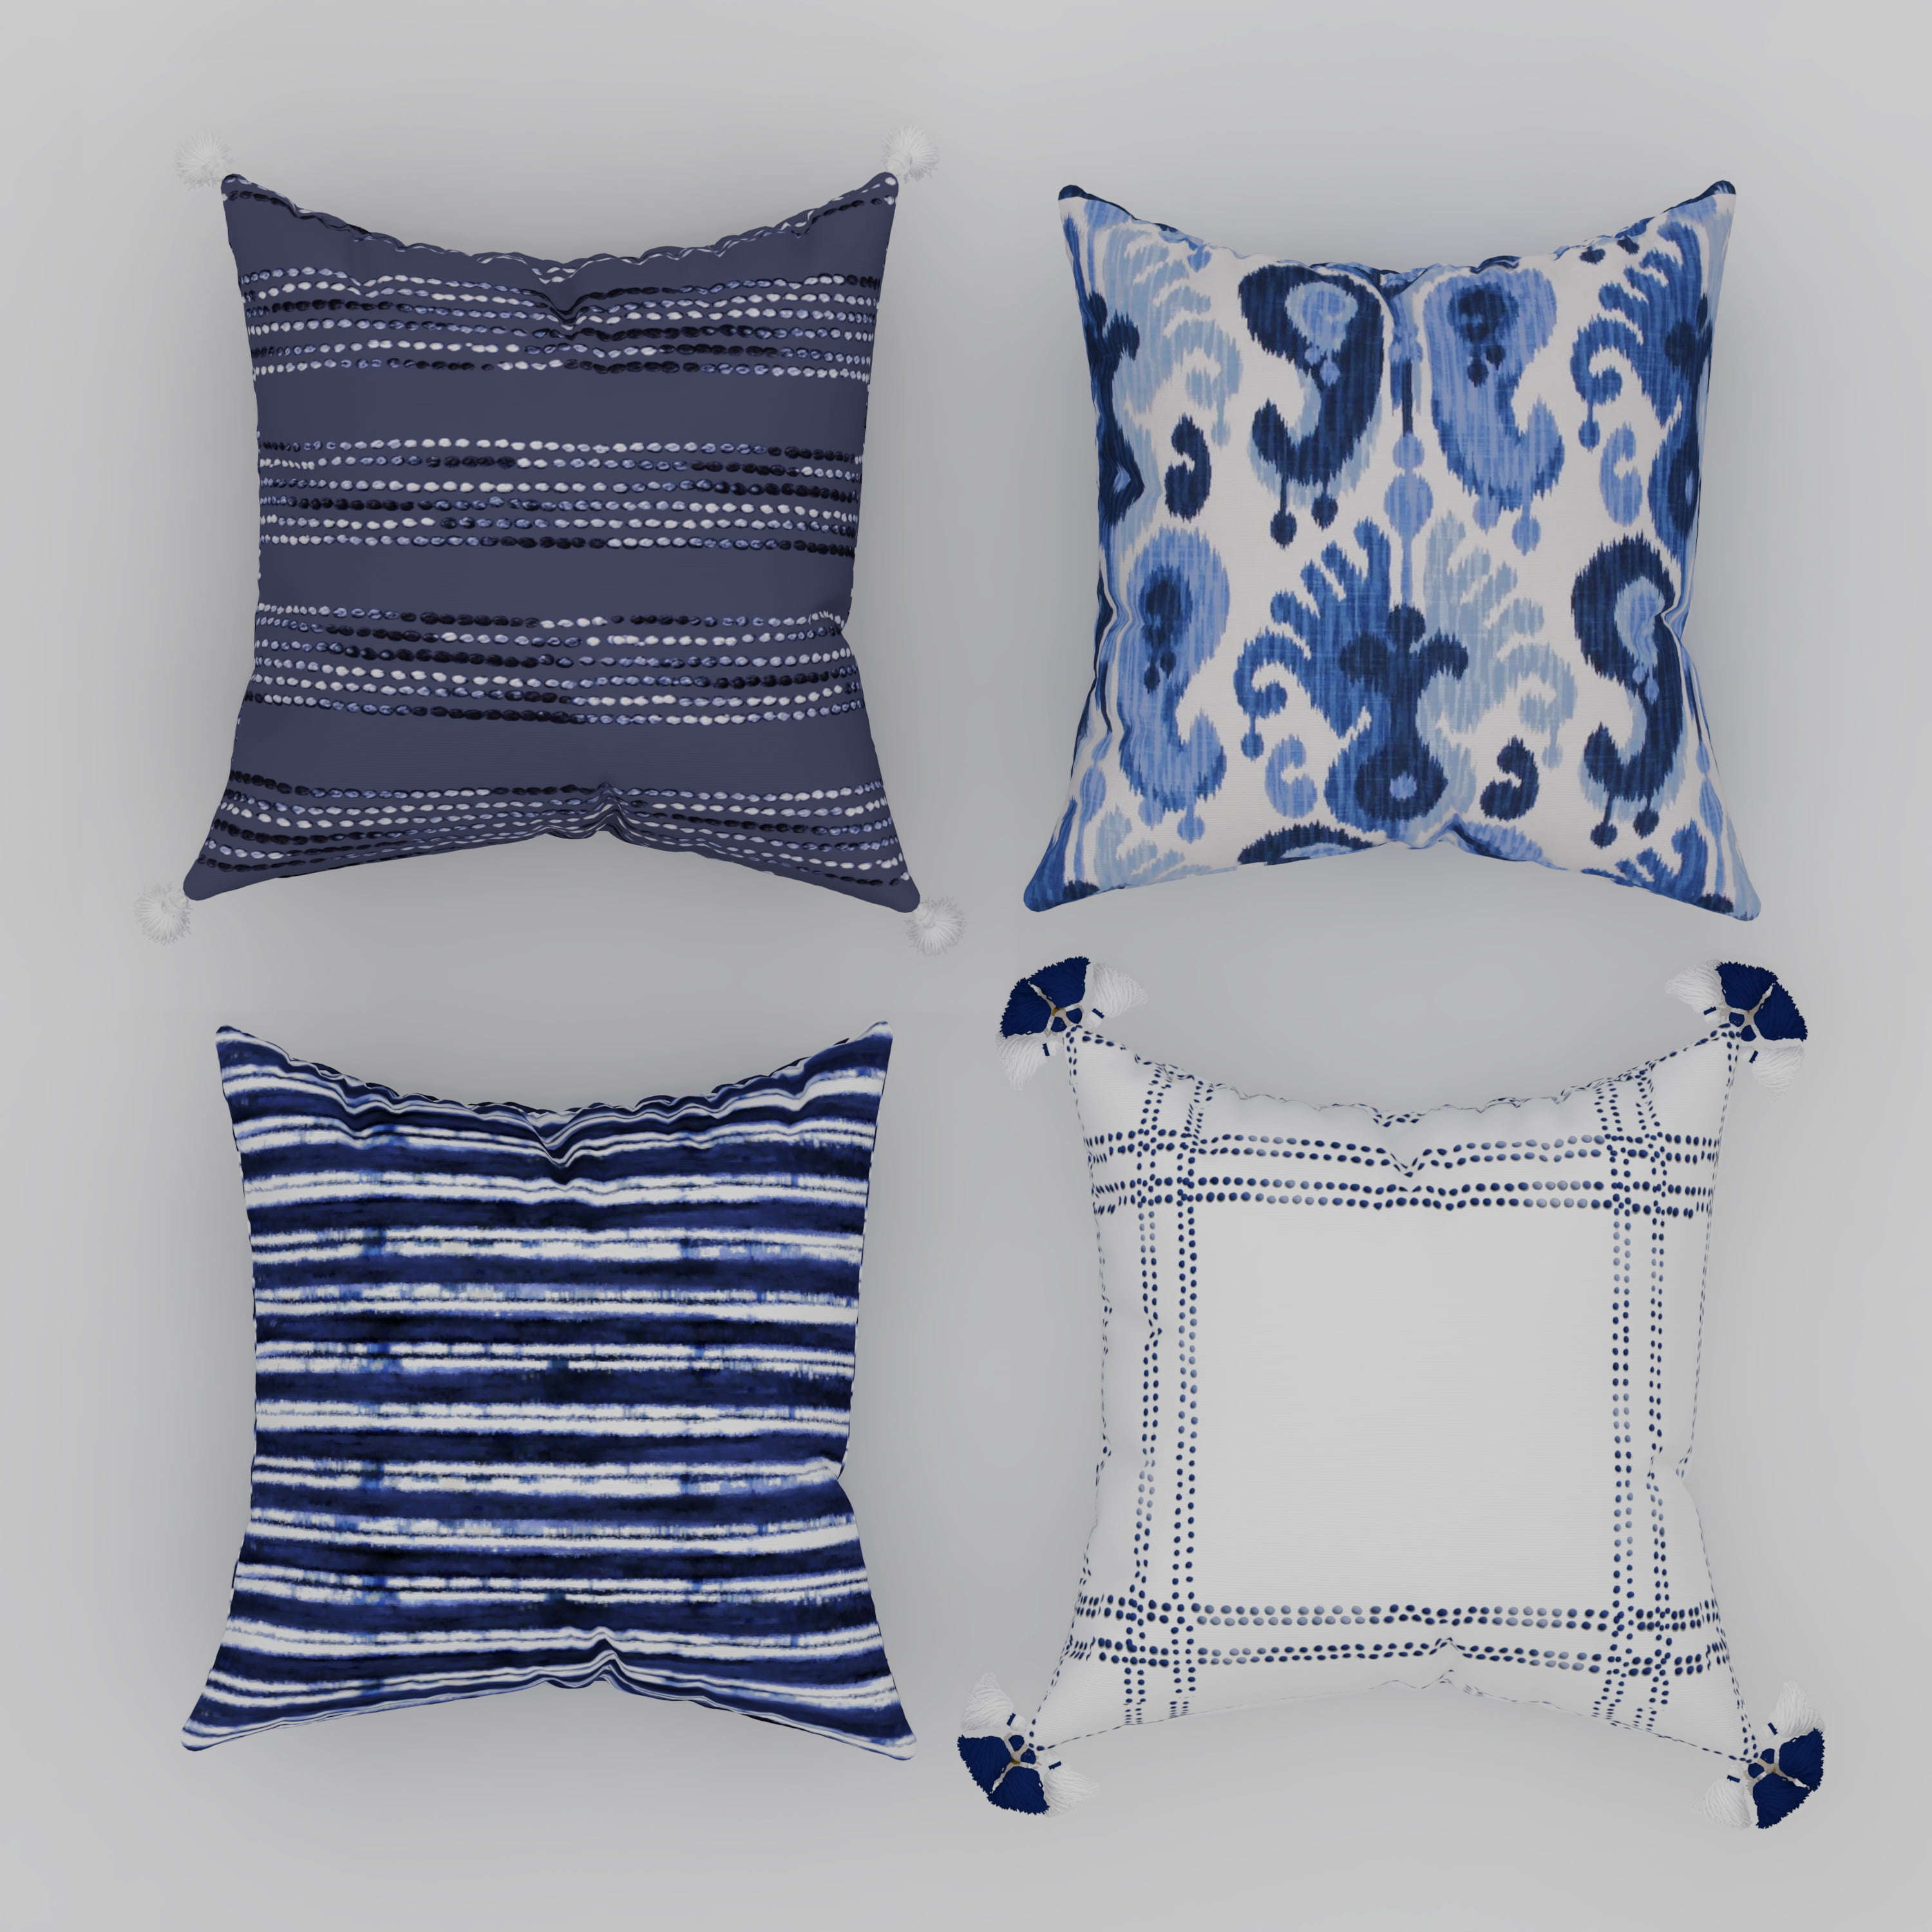 18'' Iandscape Pattern Cotton Linen Pillow Case Home Decor Sofa Cushion Cover 